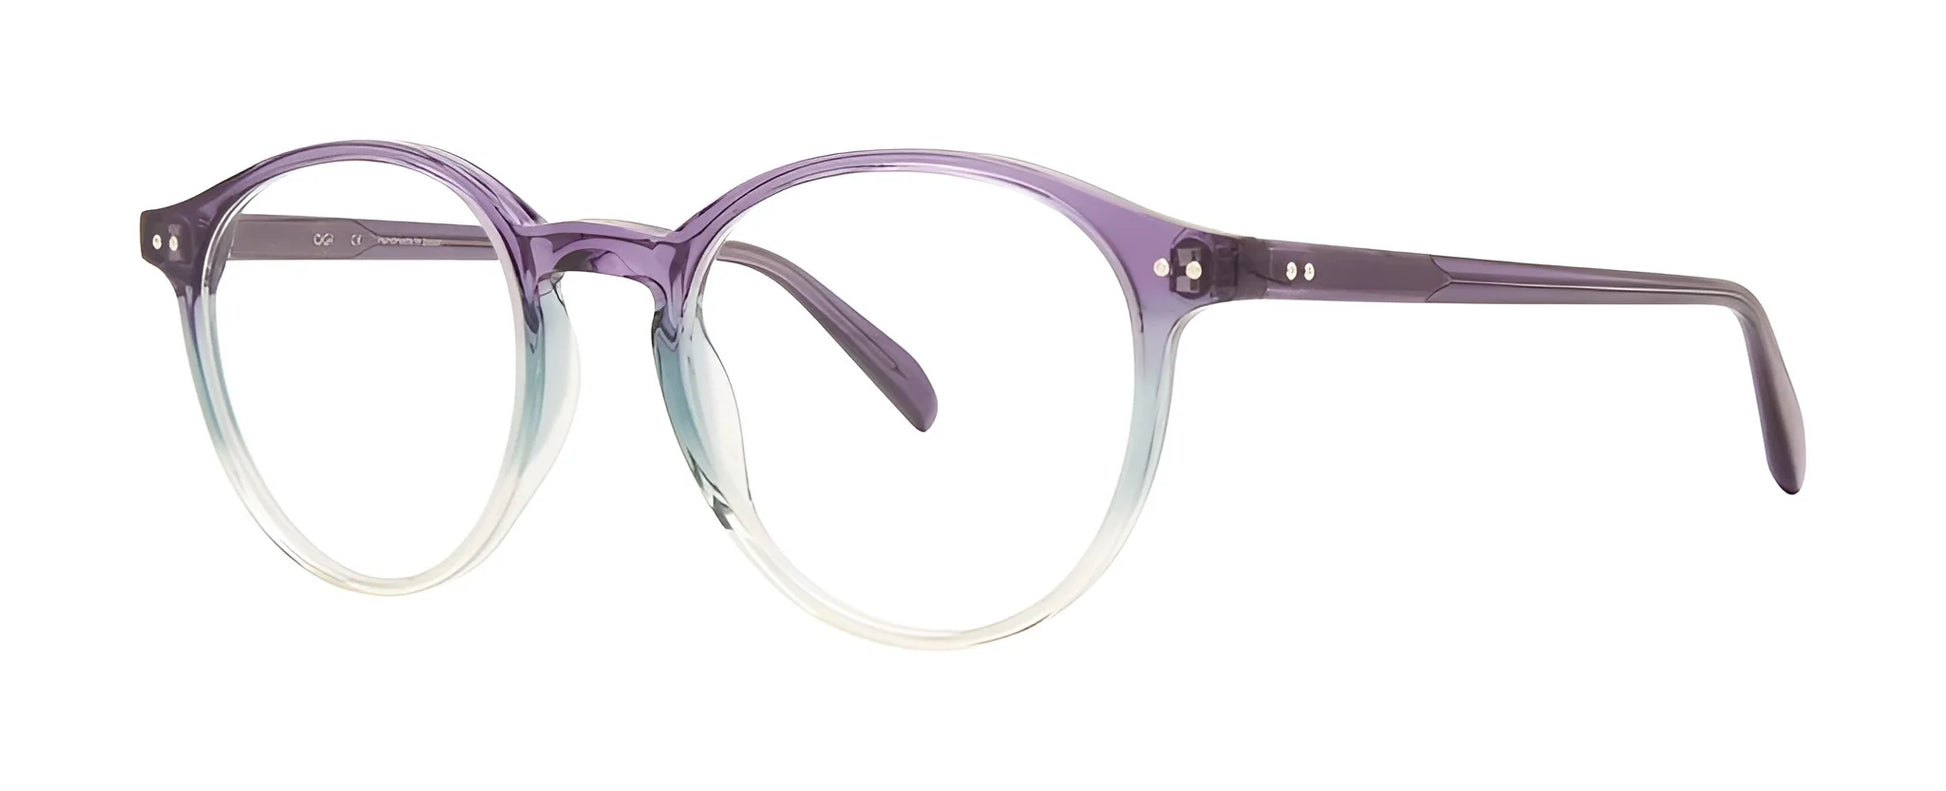 OGI BINGO Eyeglasses Purple Teal Fade